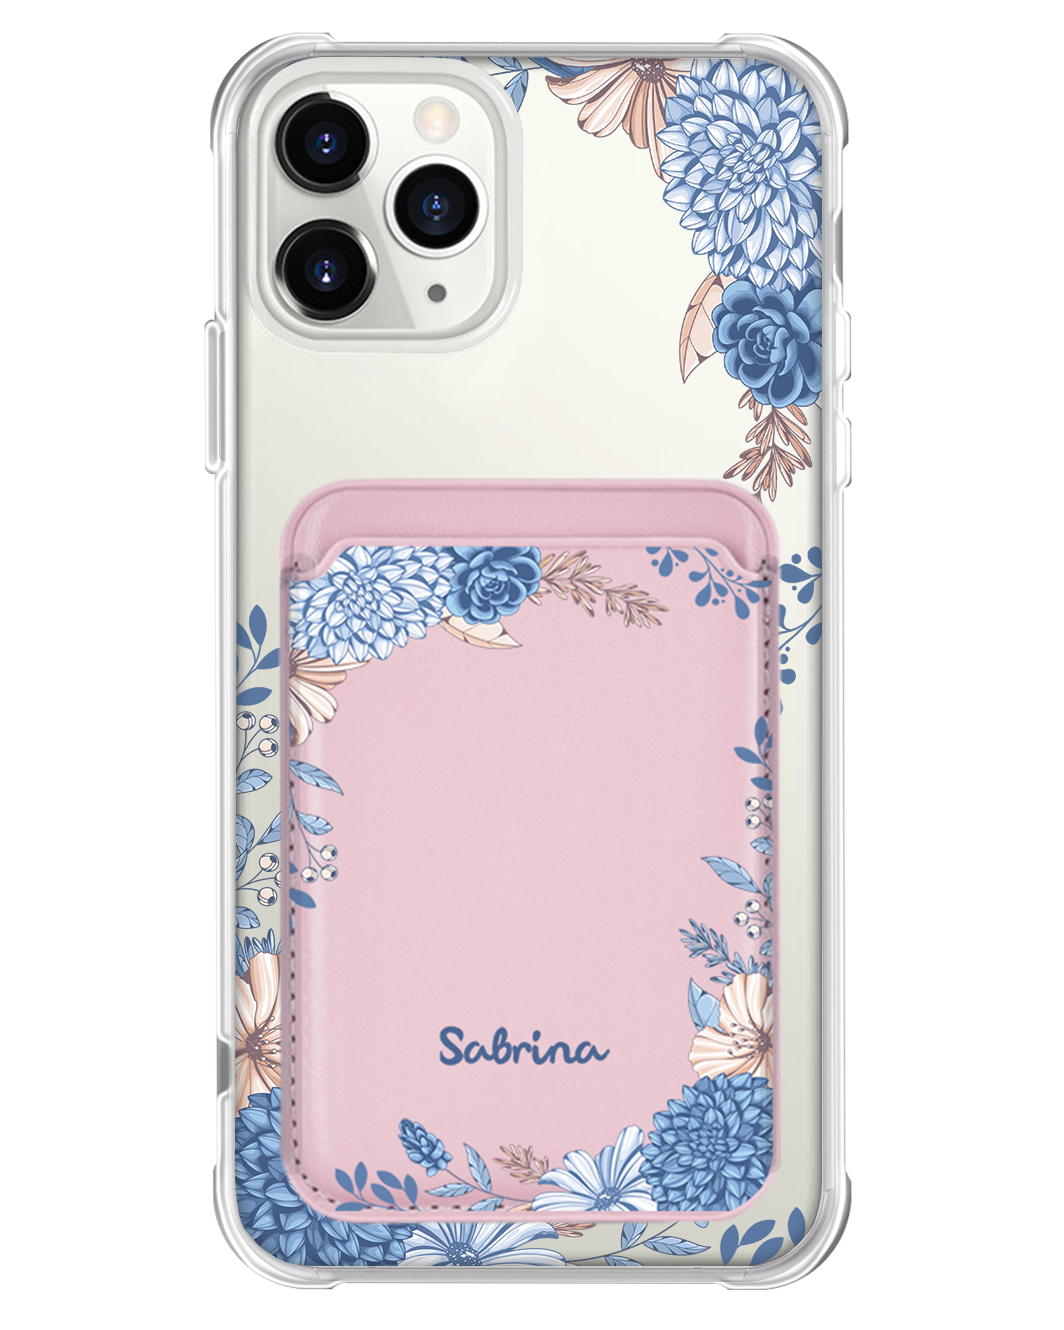 iPhone Magnetic Wallet Case - Blue Florals